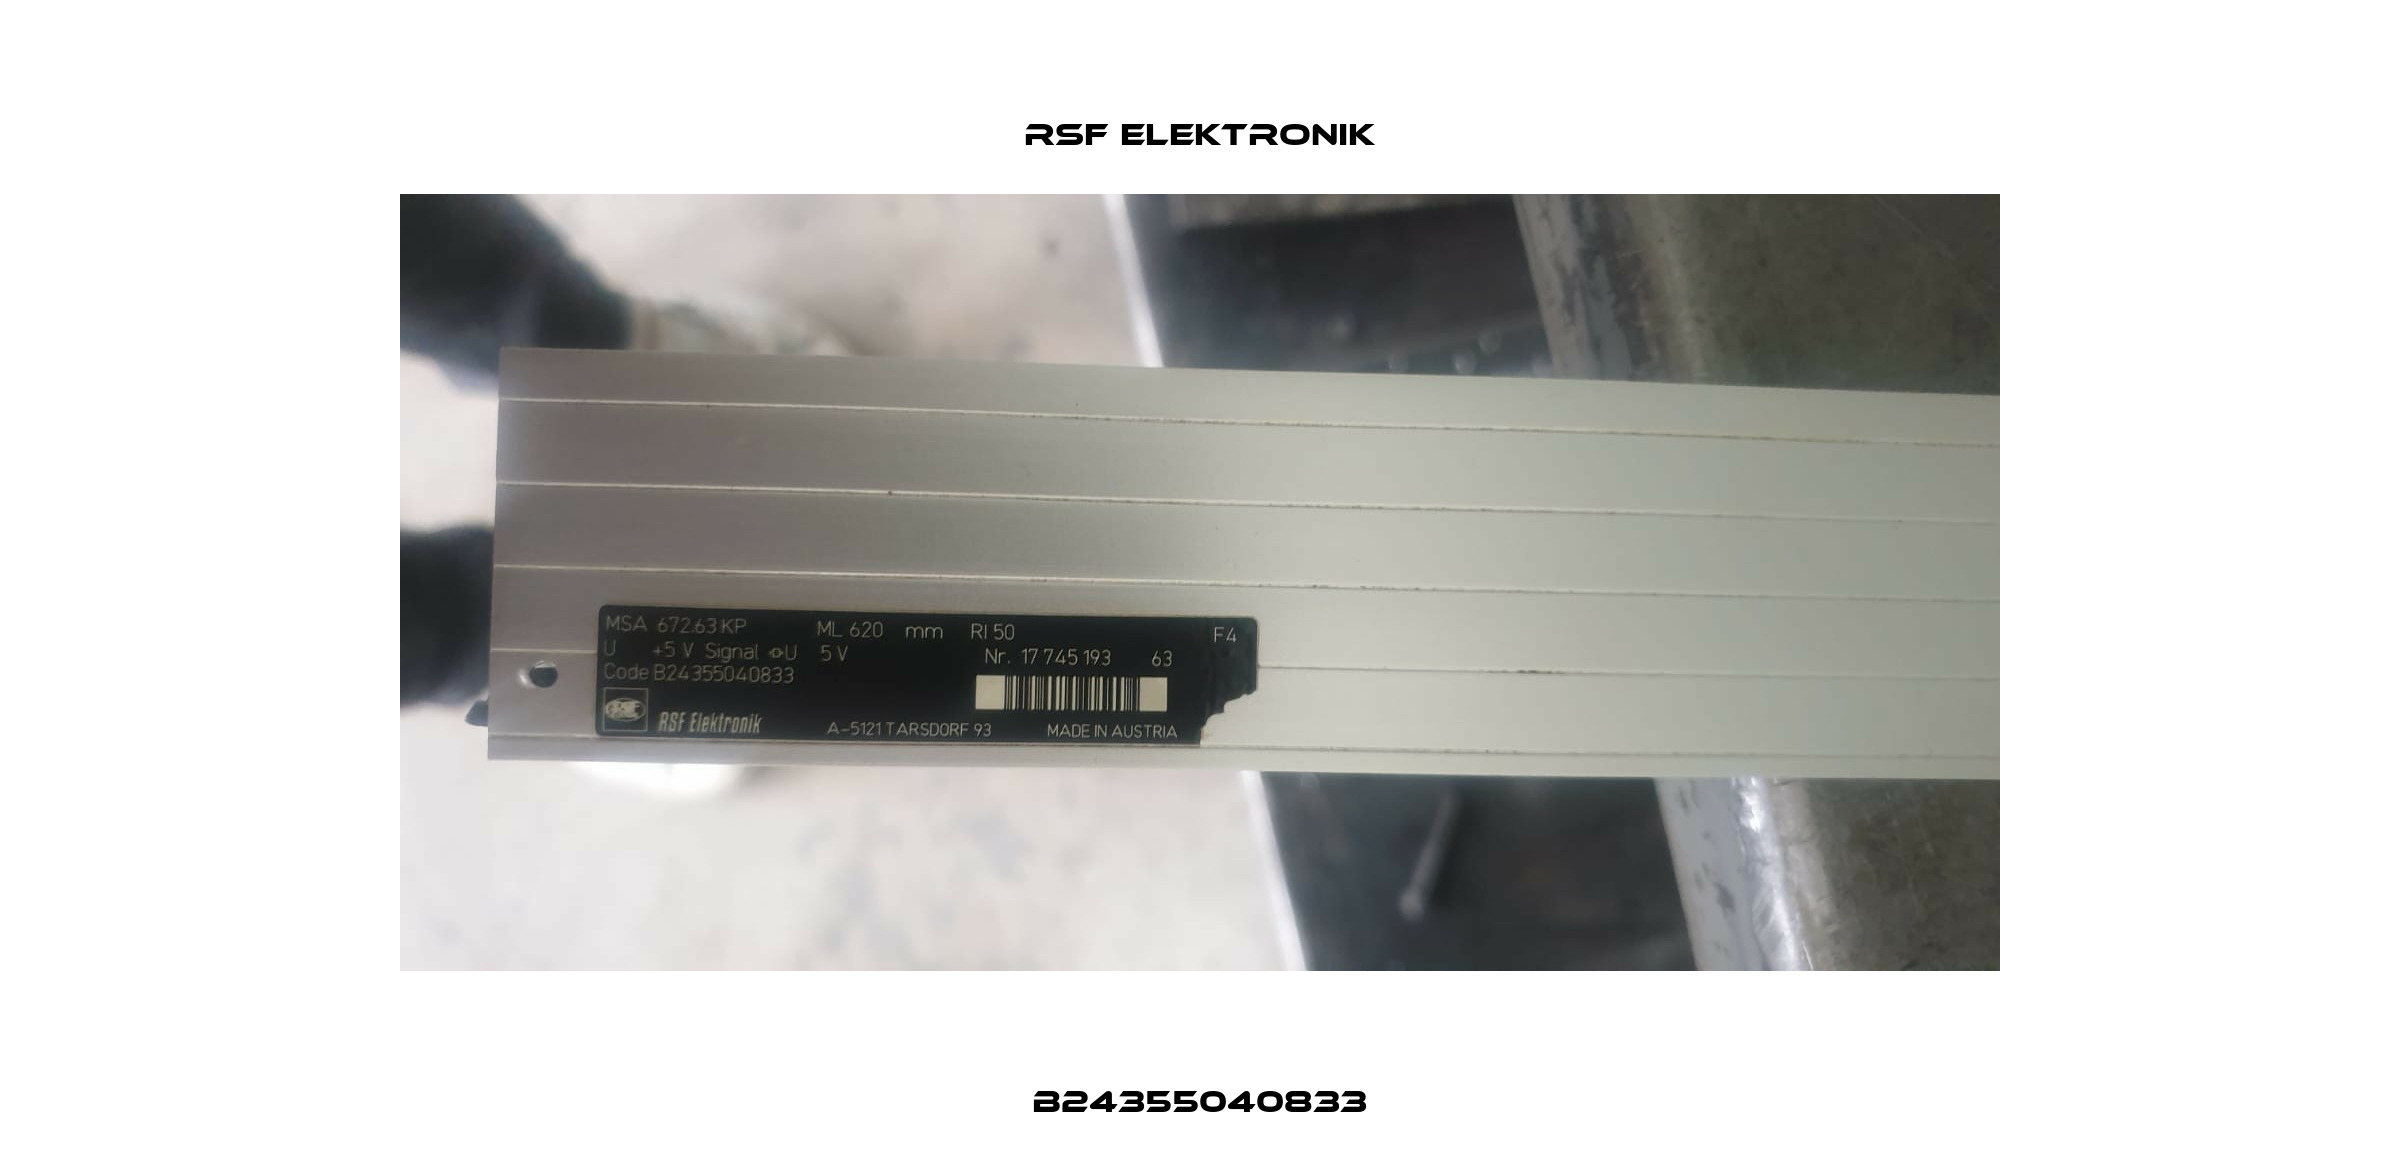 B24355040833 Rsf Elektronik